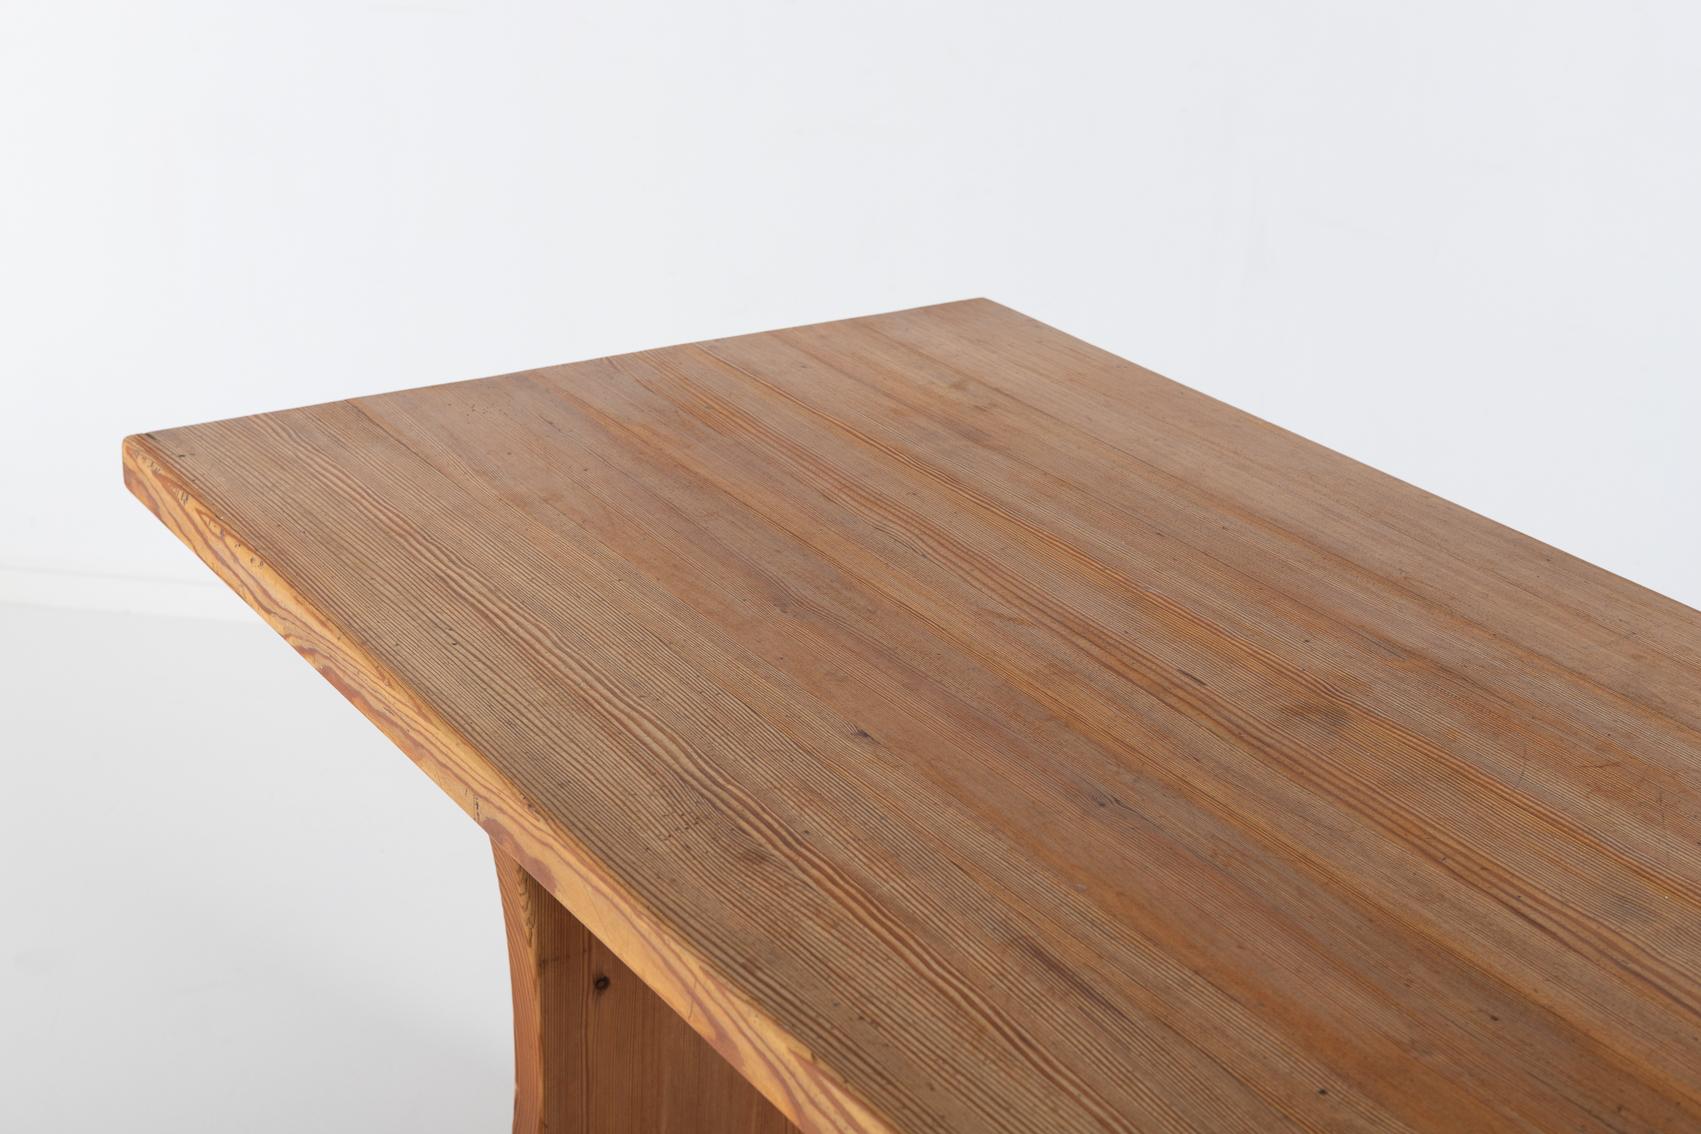 Axel Einar Hjorth ‘Sport’ solid pine table by Nordiska Kompaniet For Sale 2